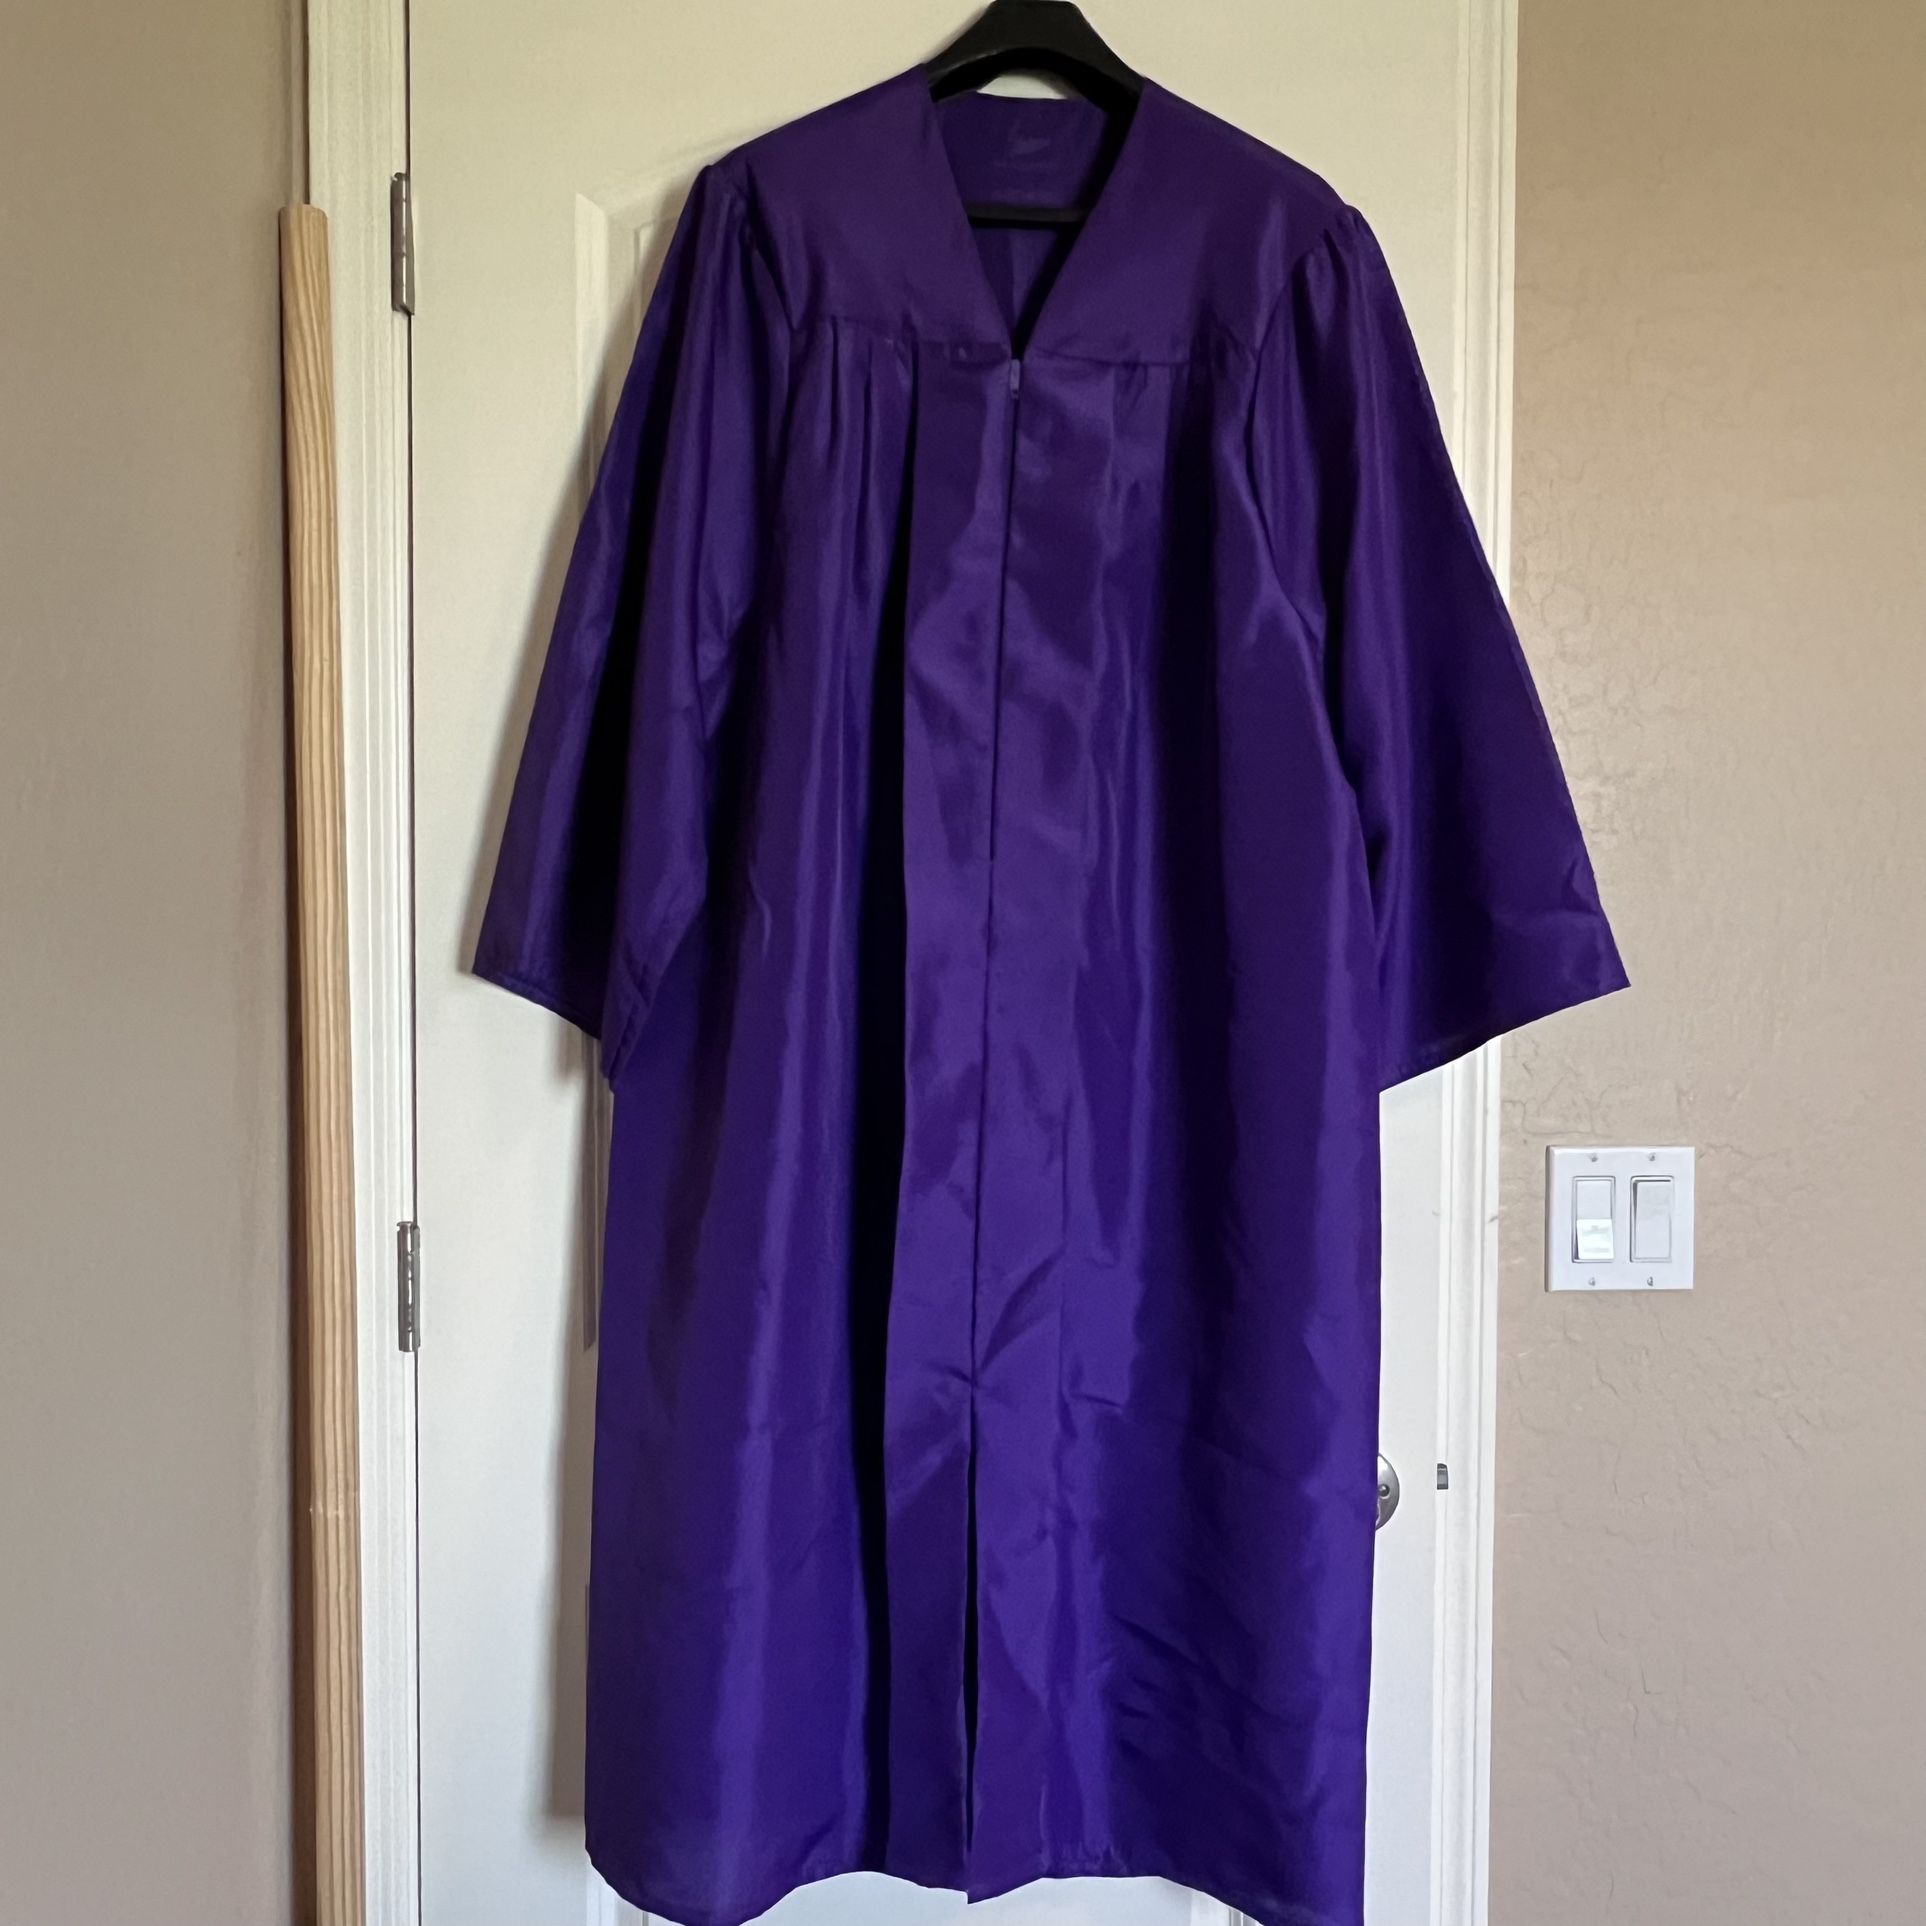 Jostens H.S. Graduation Gown